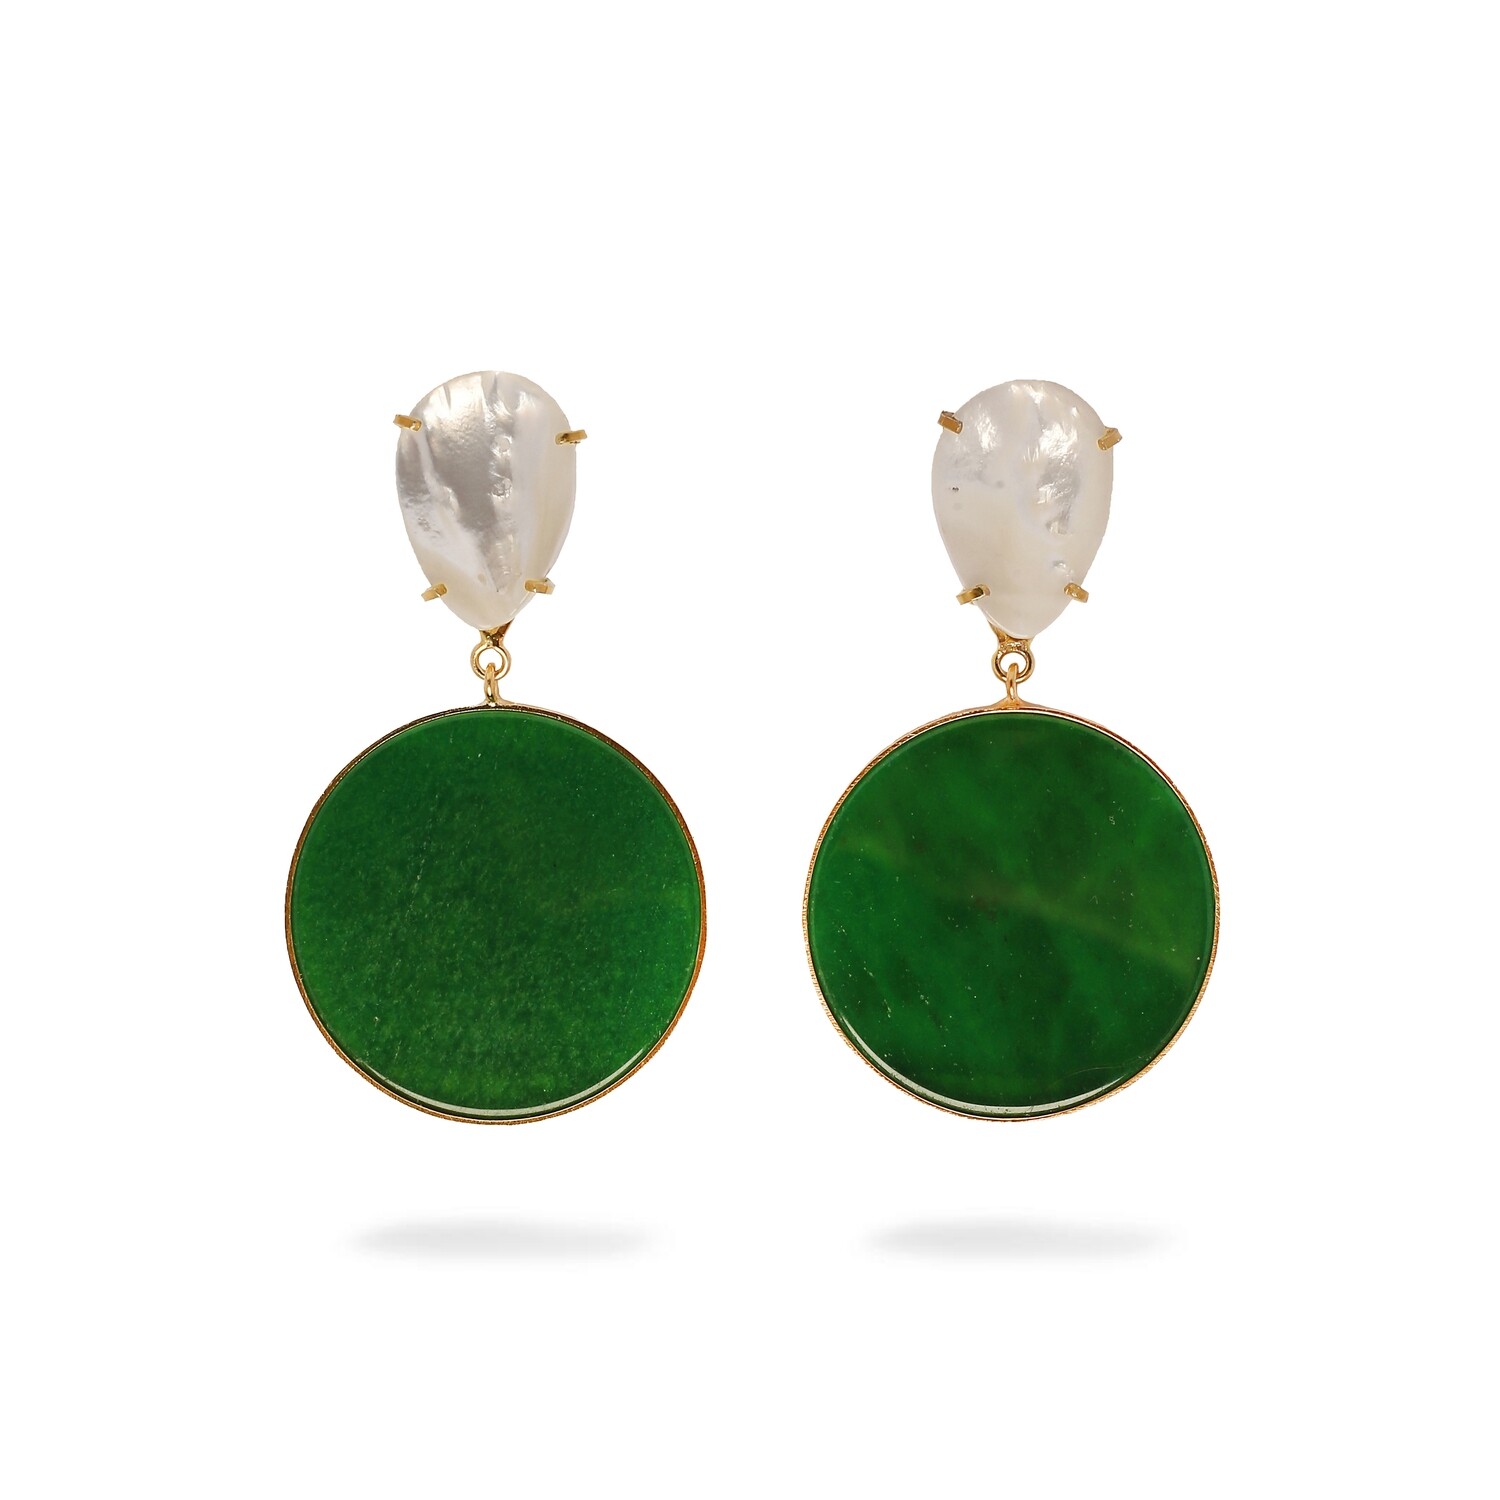 GAIA PETIT in green Agate gemstones